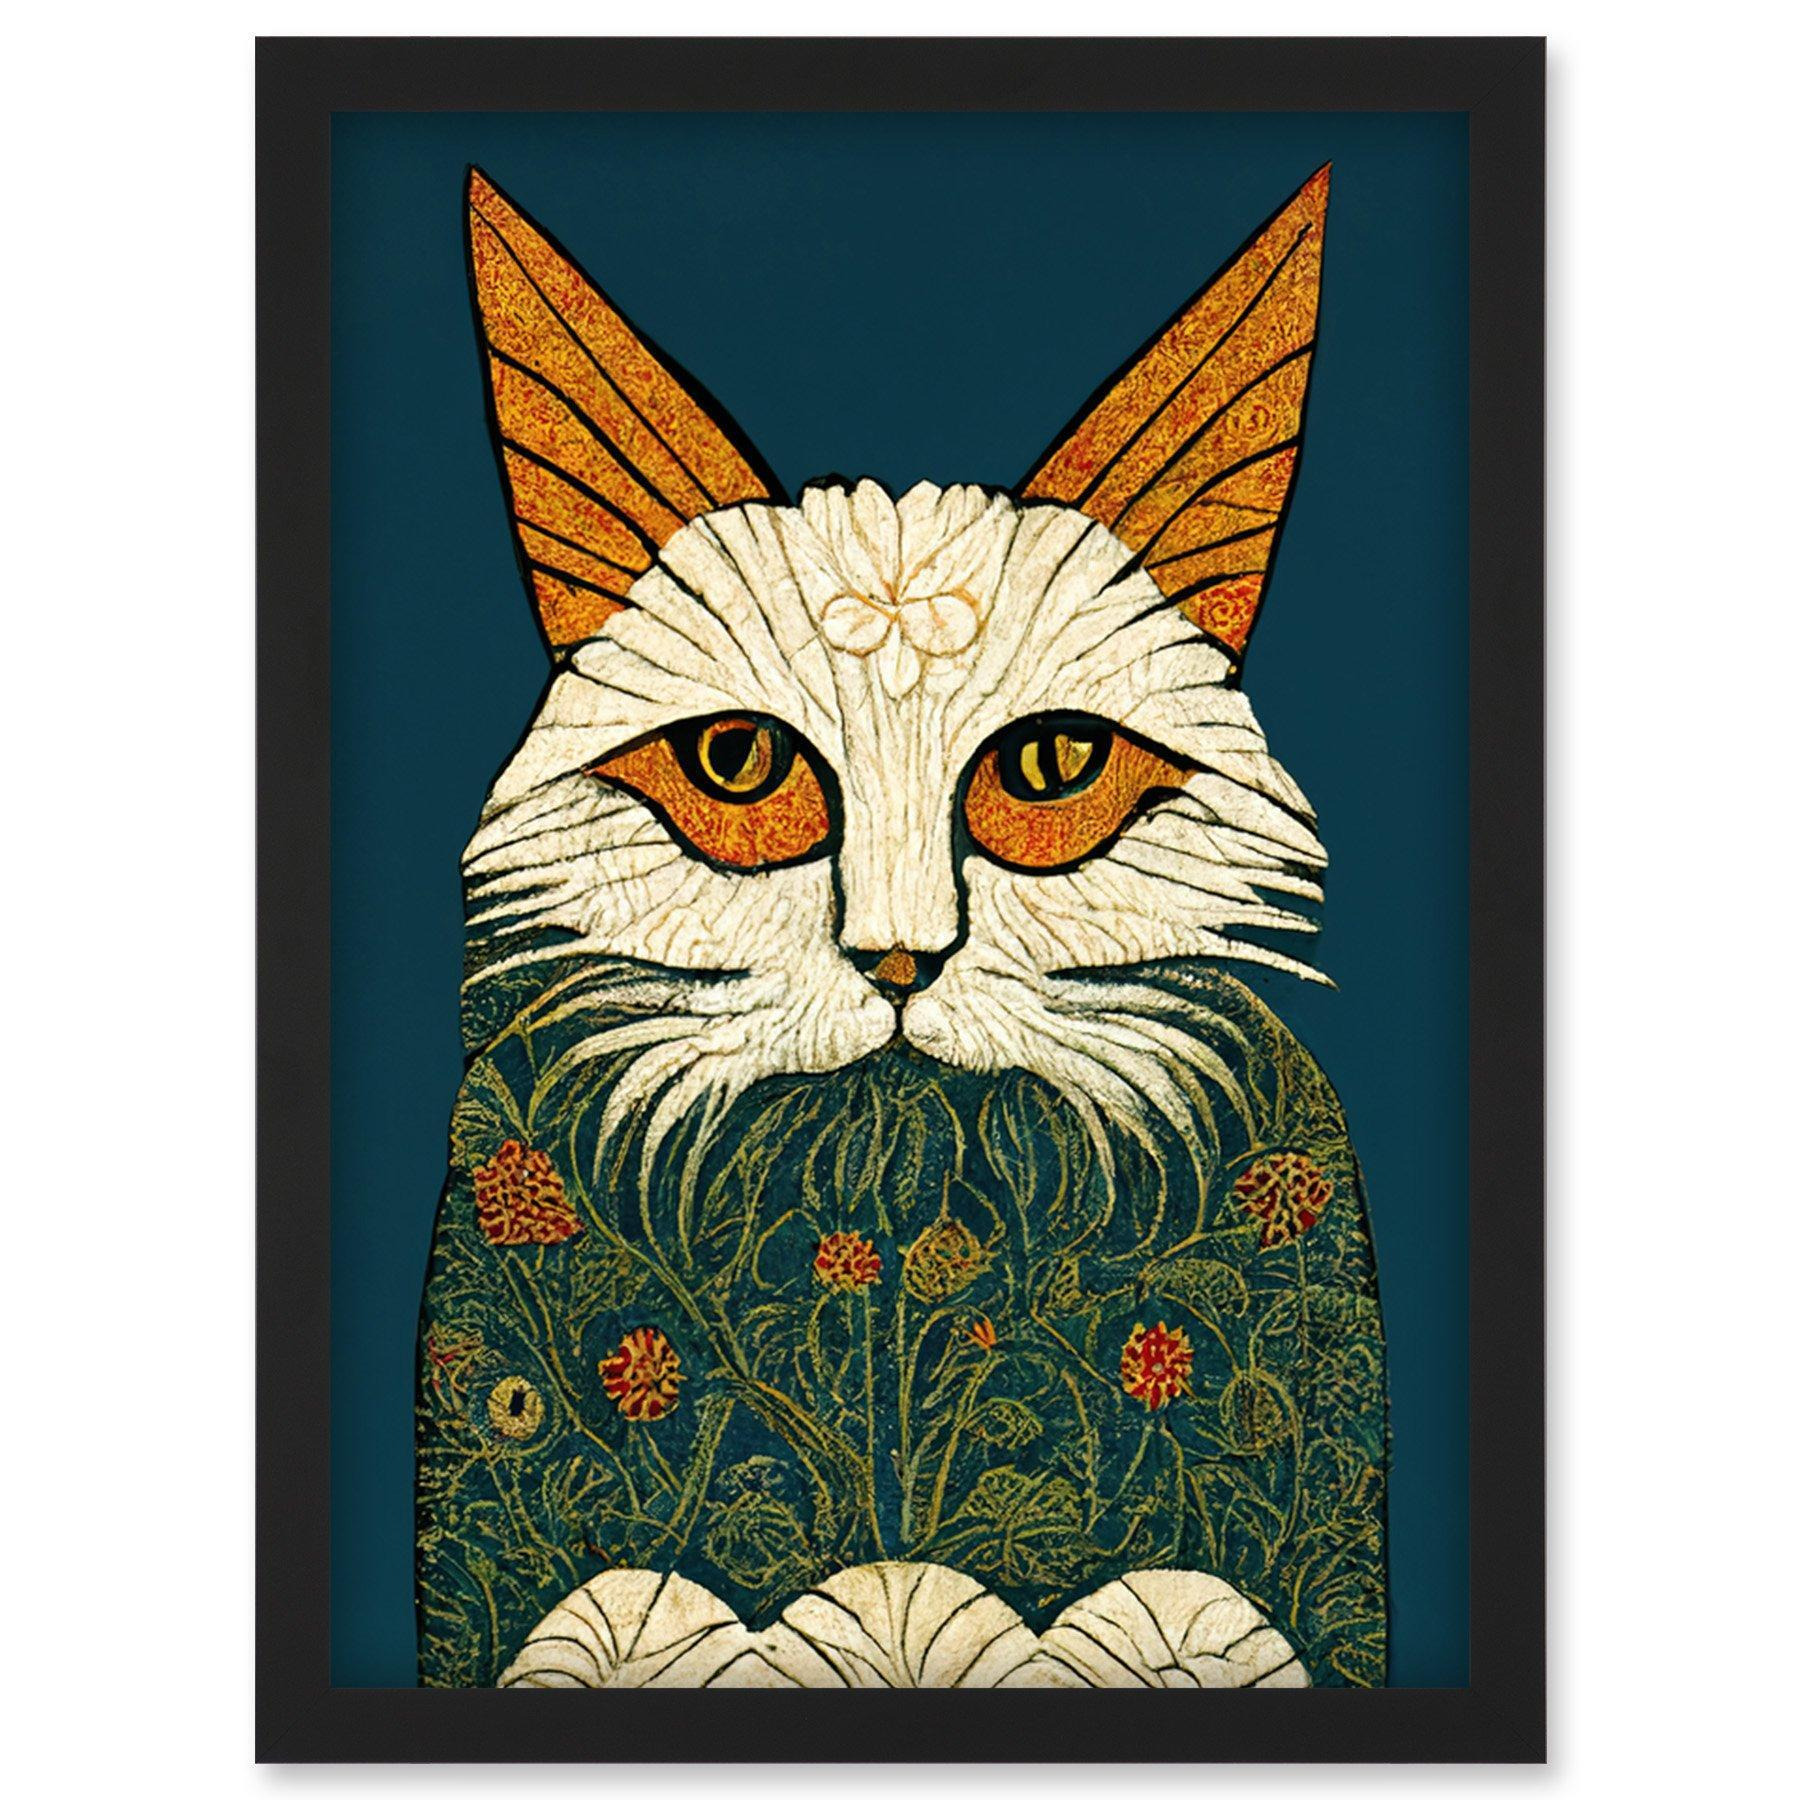 Melancholy Moggie Cat Illustration William Morris Style Teal Gold Artwork Framed Wall Art Print A4 - image 1